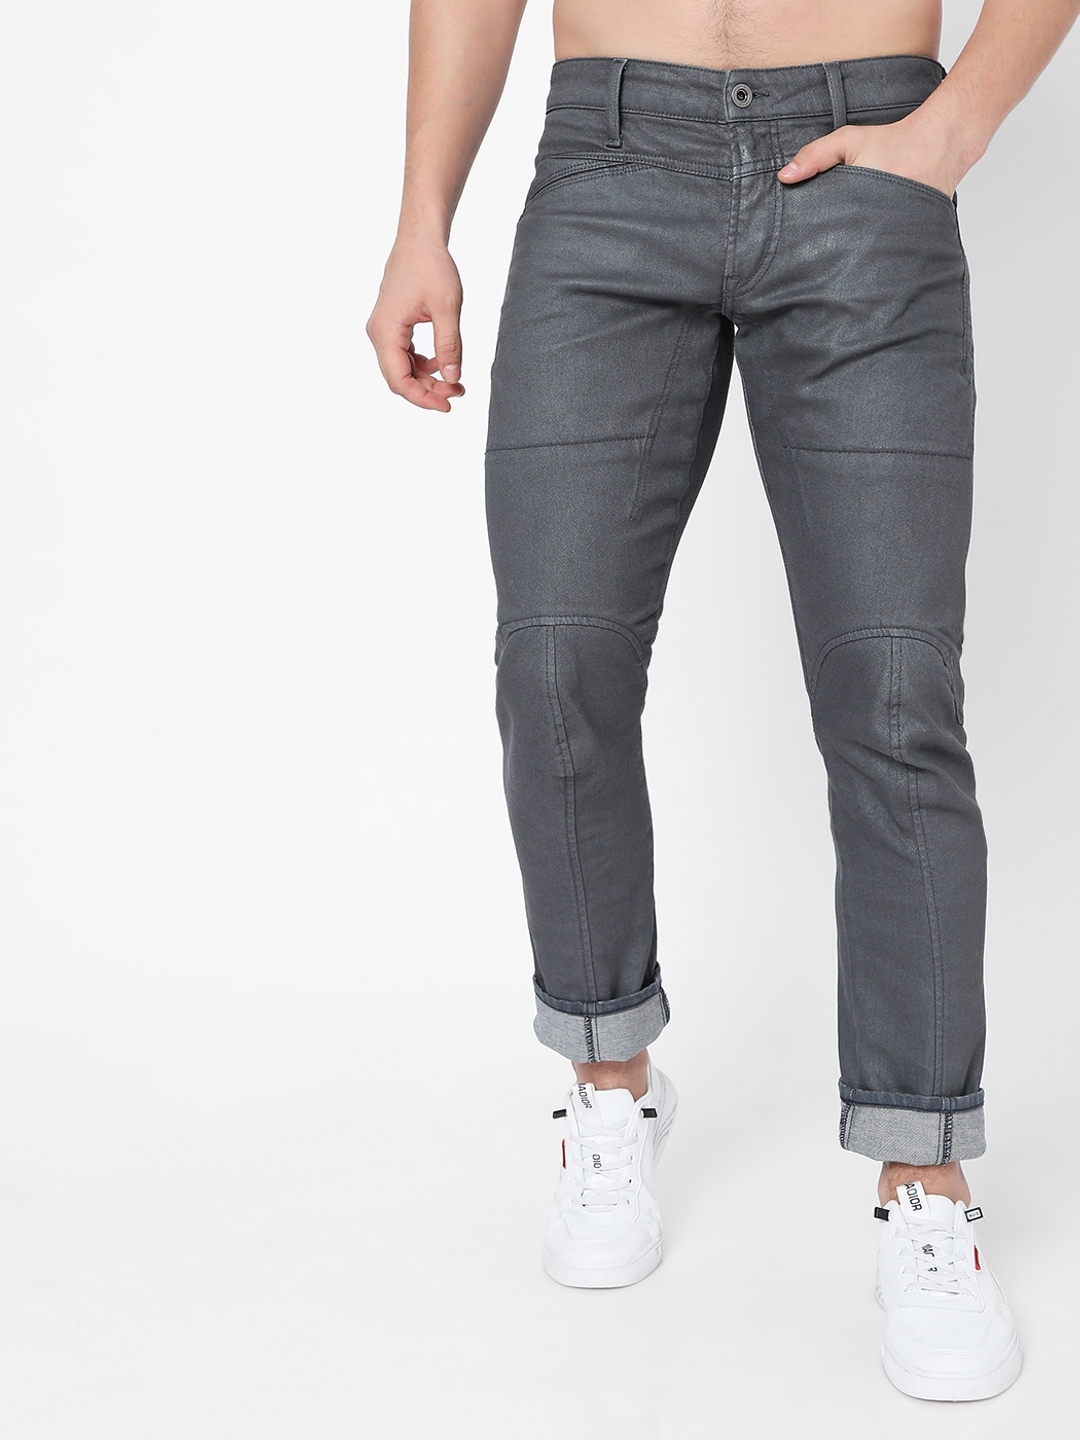 Ankle Fit Shade Blue Rough Look Premium Denim For men - Peplos – Peplos  Jeans